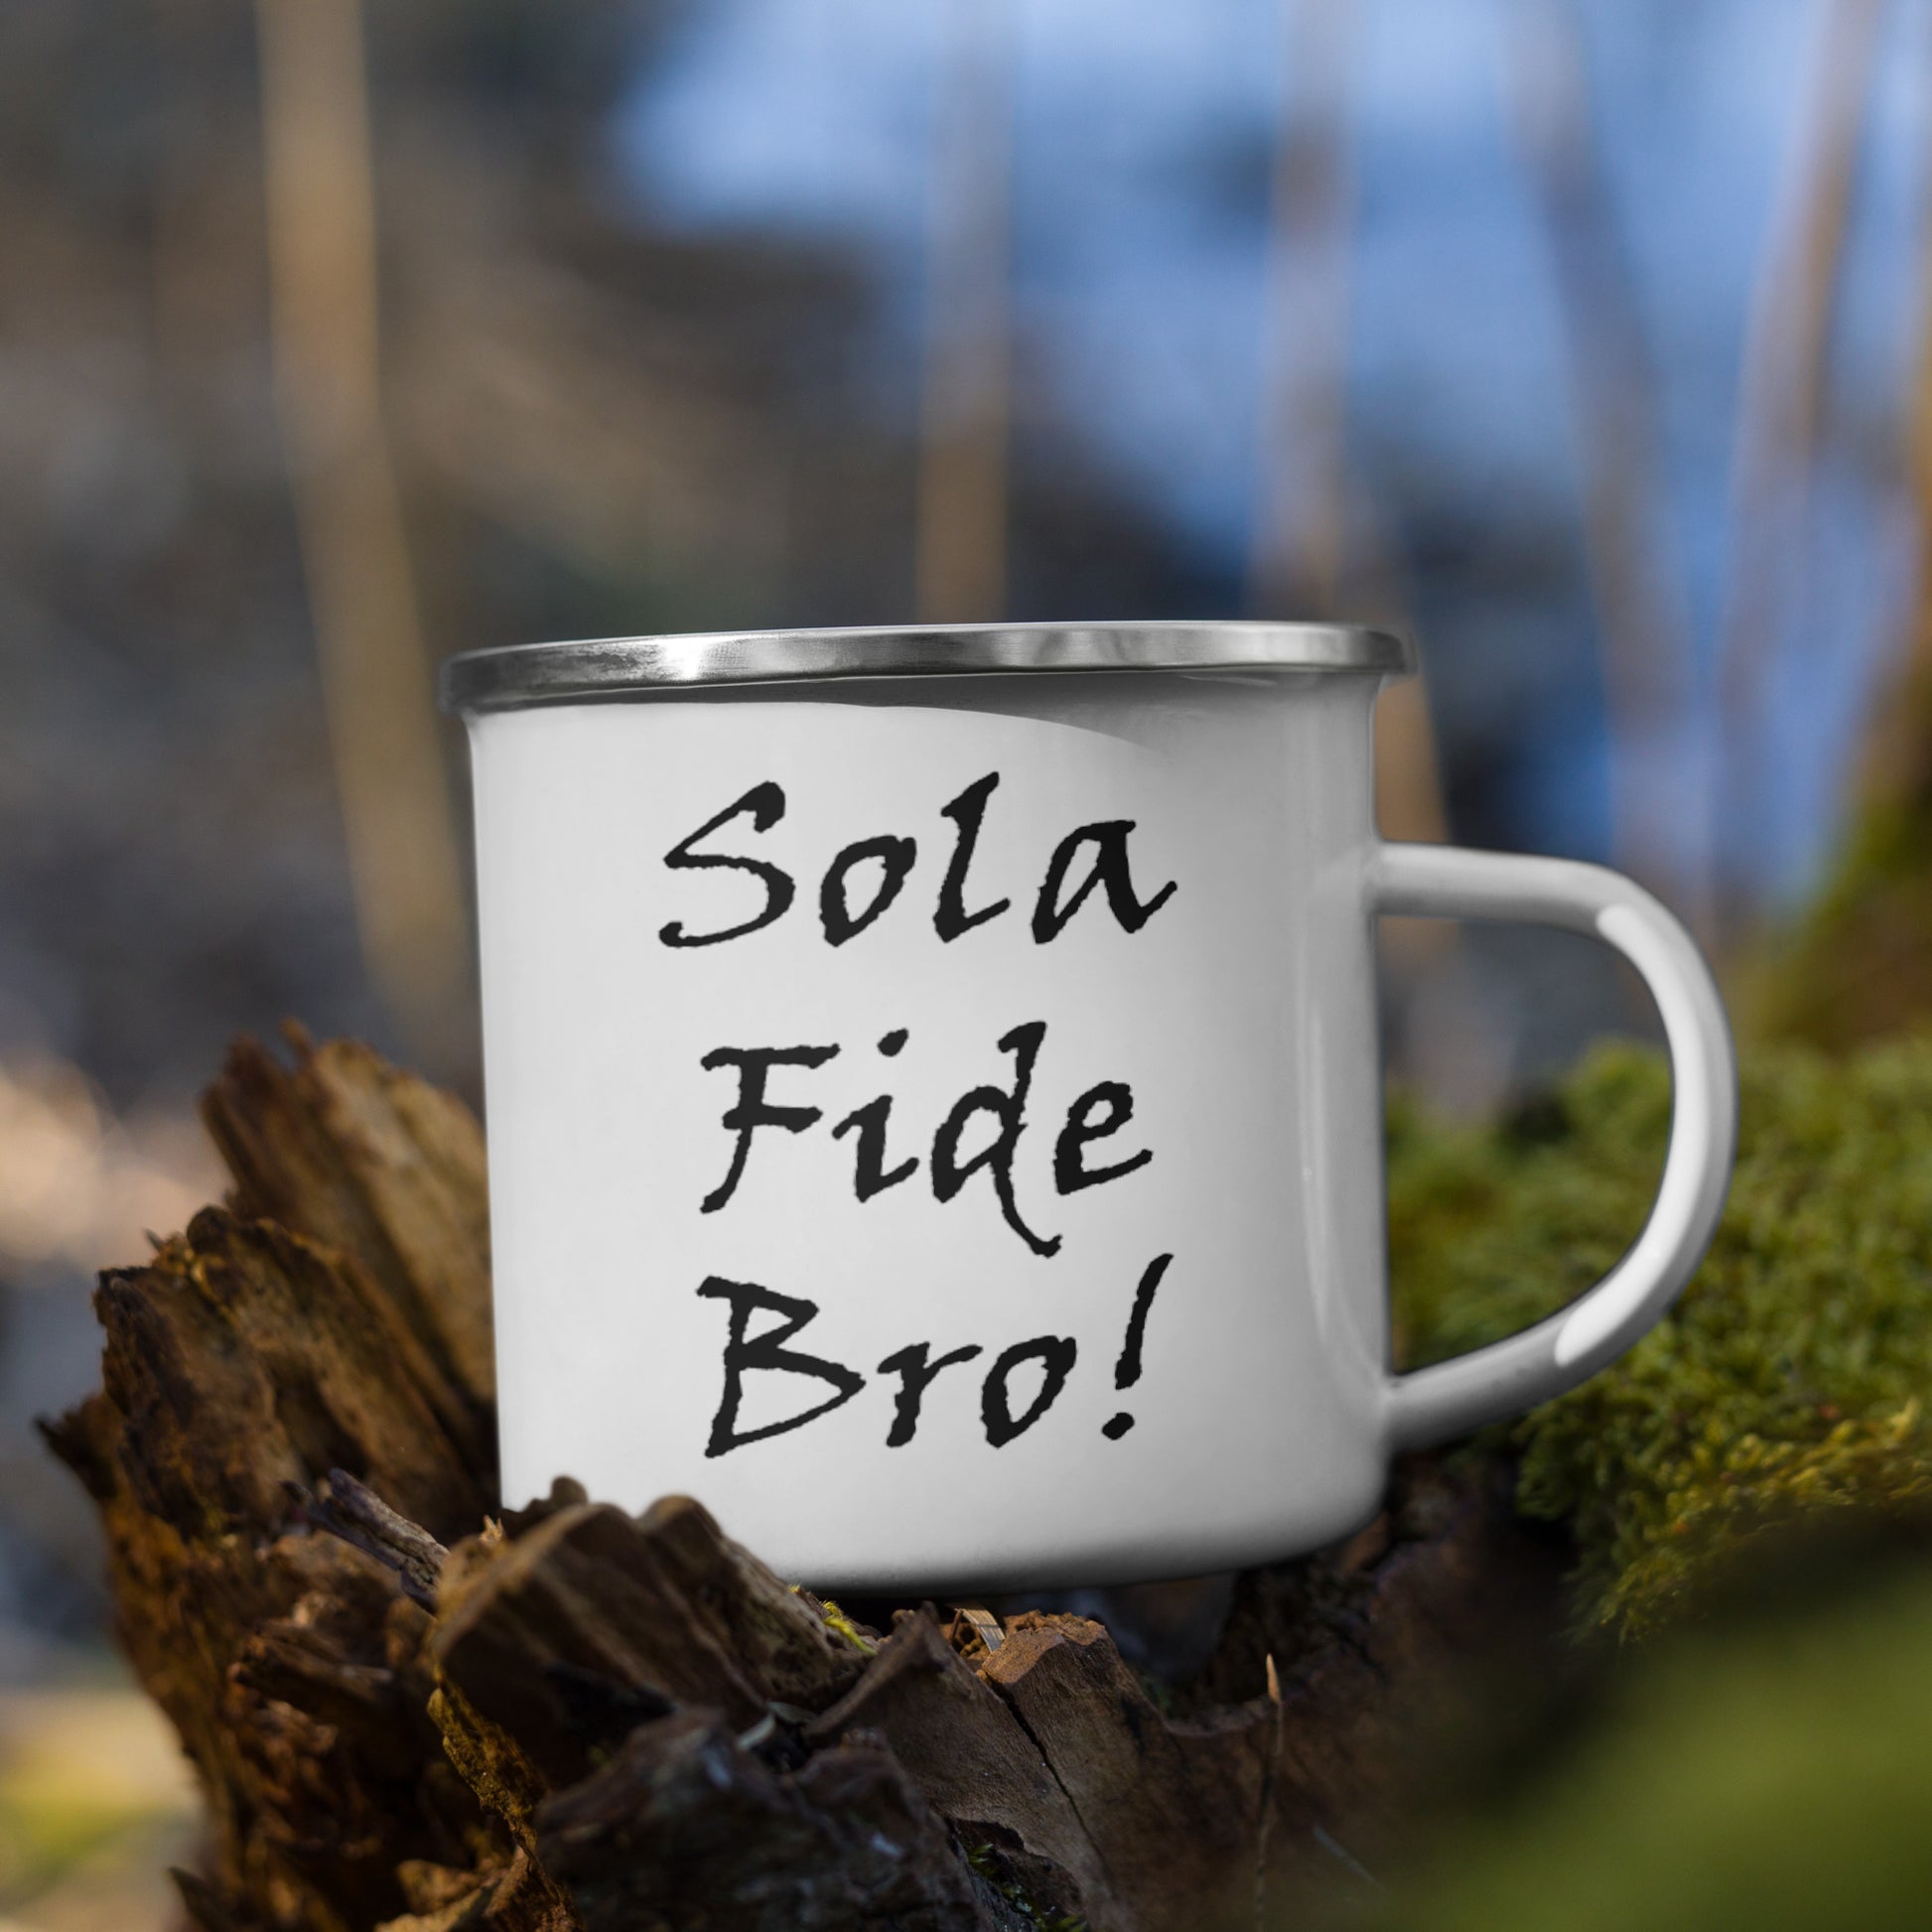 Sola Fide Bro! Enamel Mug - Solid Rock Designs | Christian Apparel